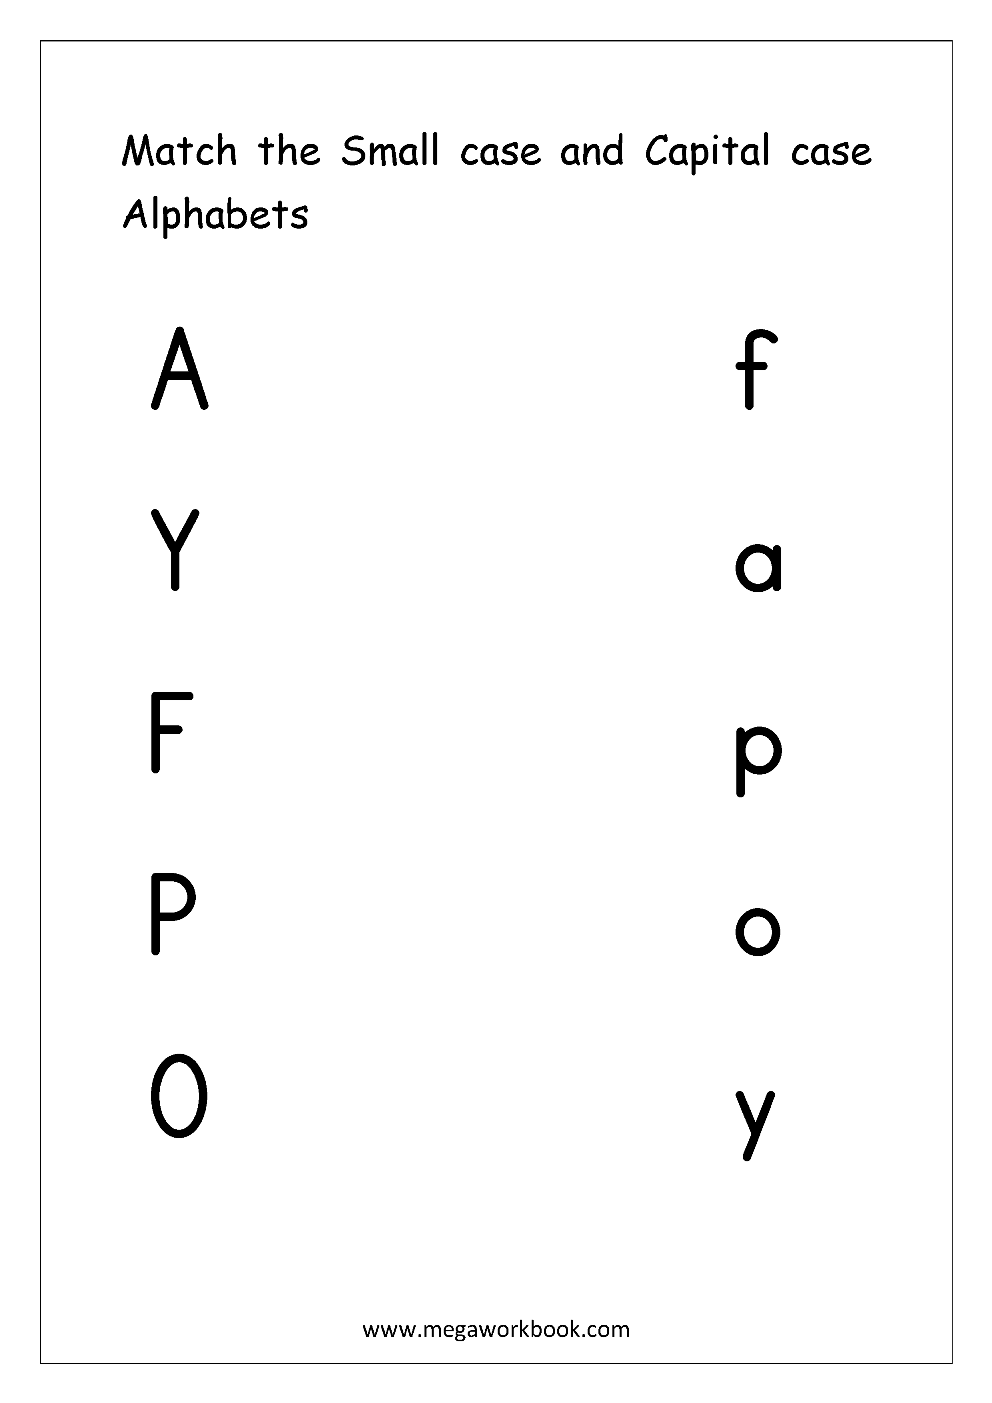 Free English Worksheets - Alphabet Matching - MegaWorkbook